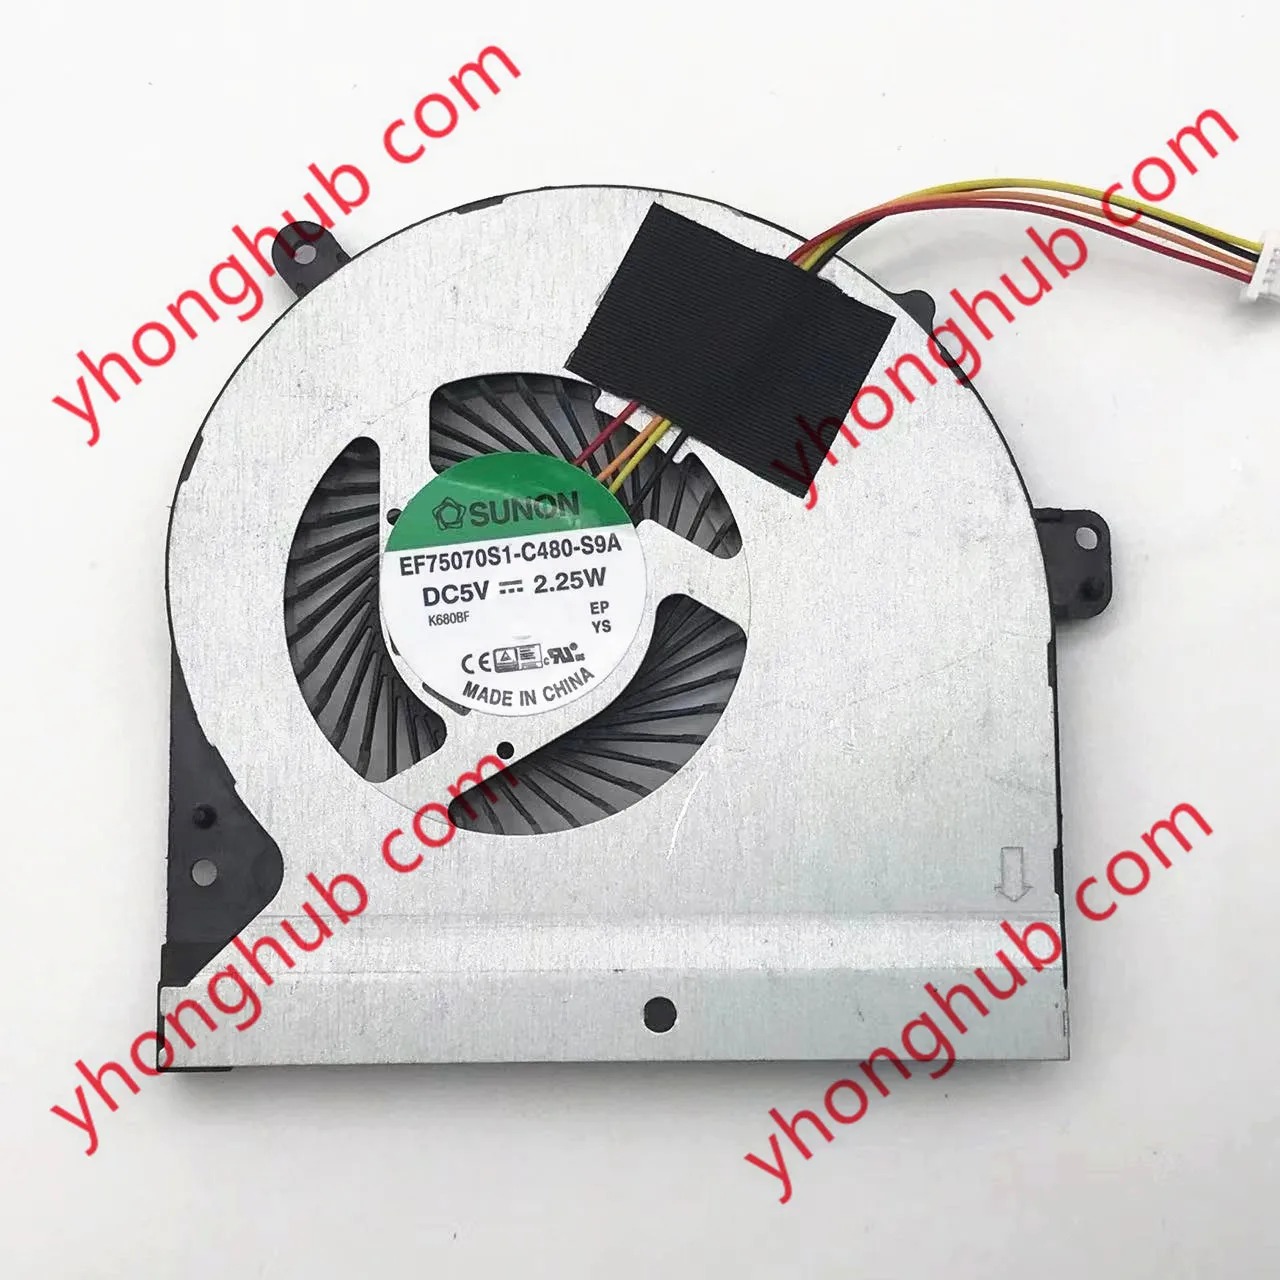 

SUNON EF75070S1-C480-S9A DC 5V 2.25W 4-wire Server Laptop Cooling Fan